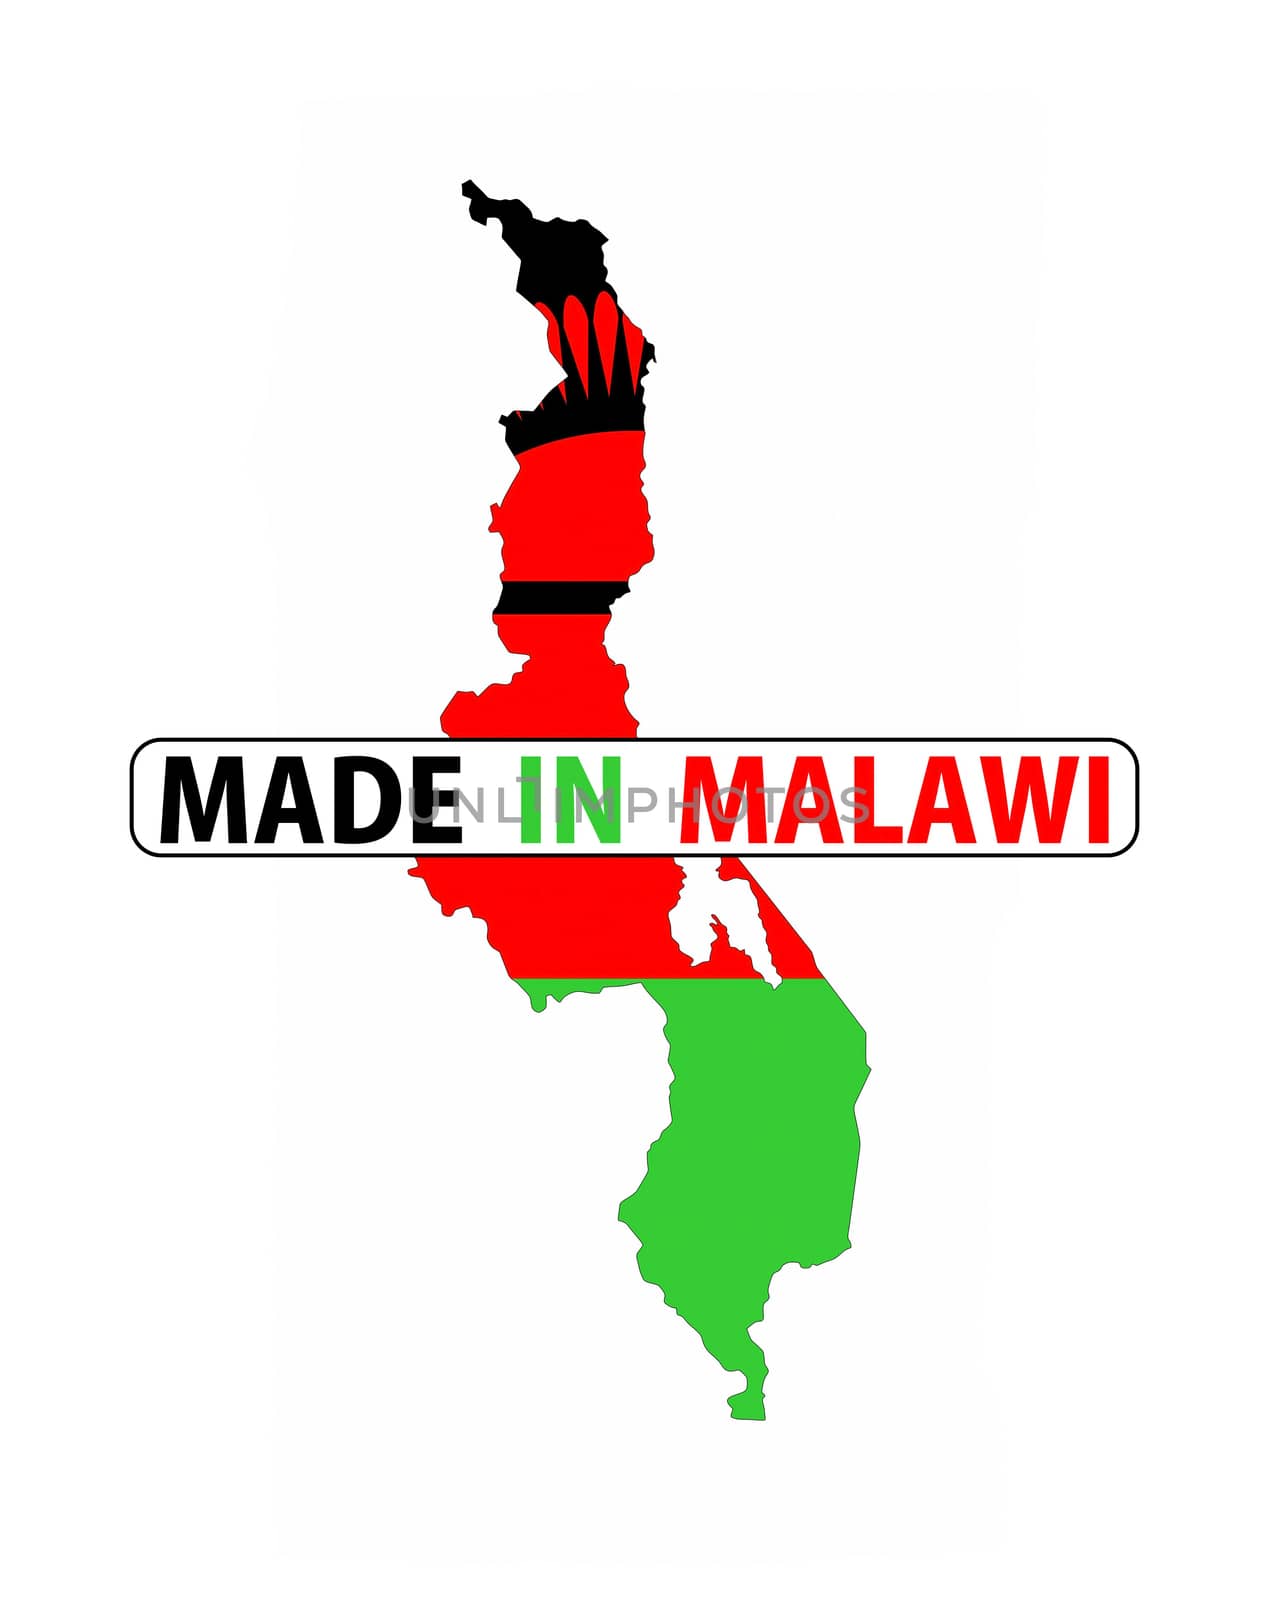 made in malawi by tony4urban